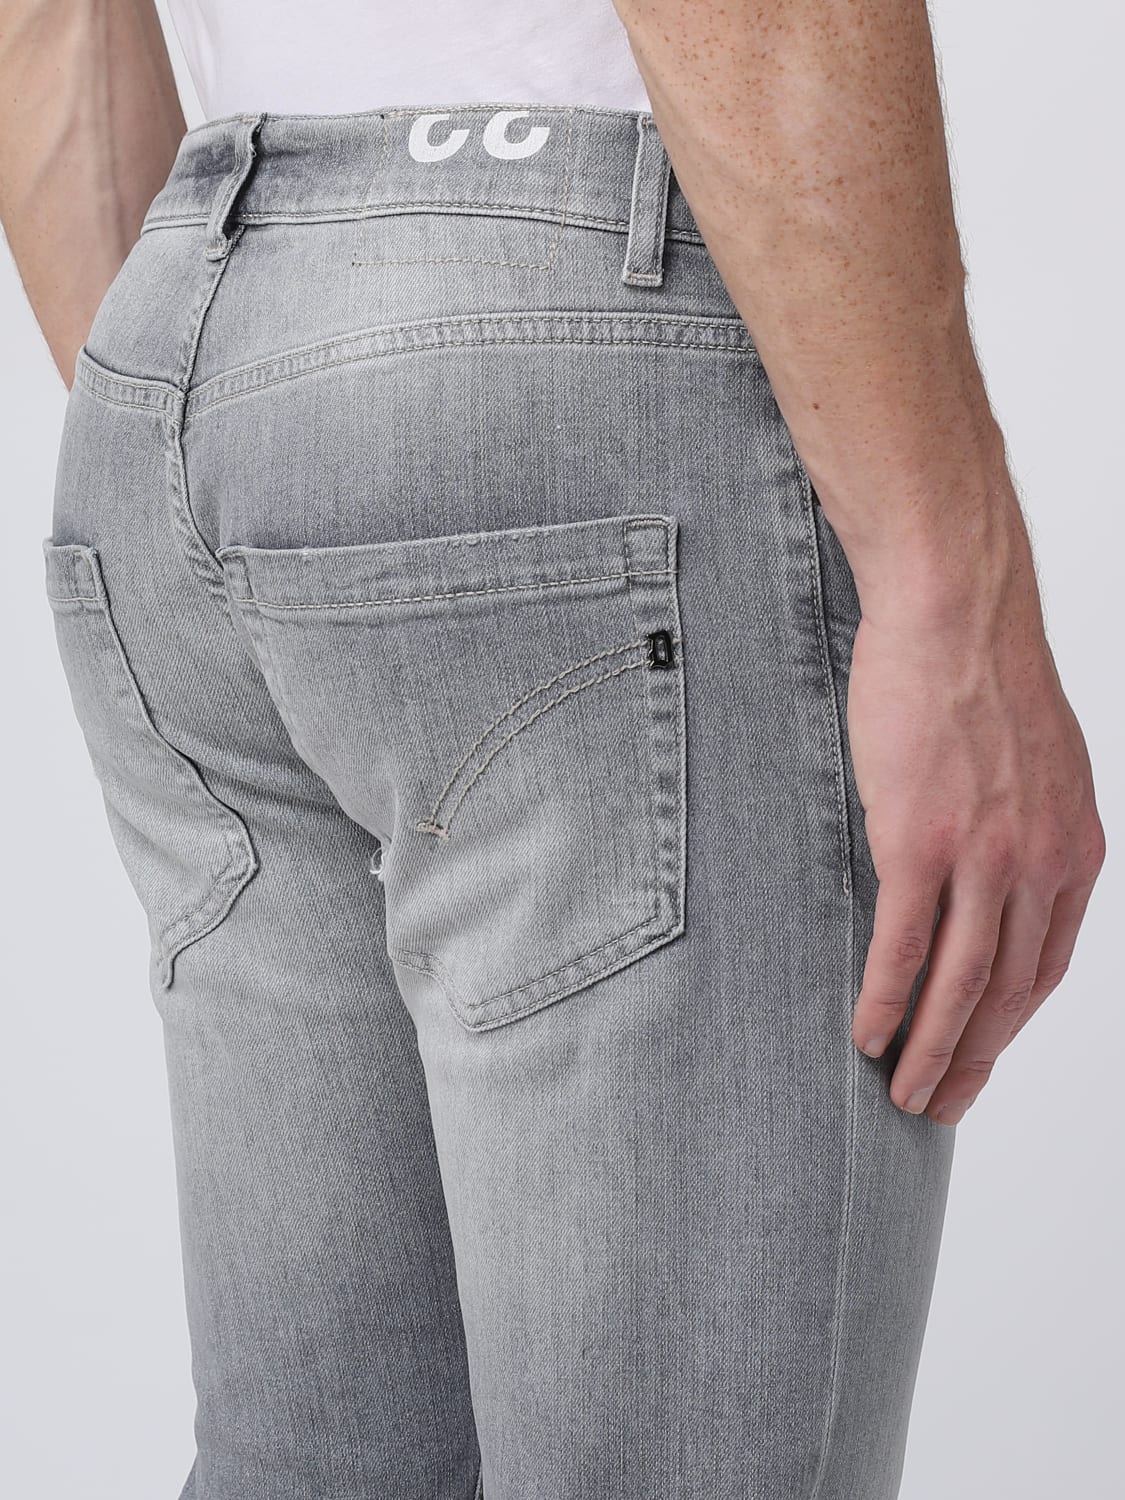 DONDUP: jeans - Grey | Dondup jeans UP168DSE327UFM7 online at GIGLIO.COM